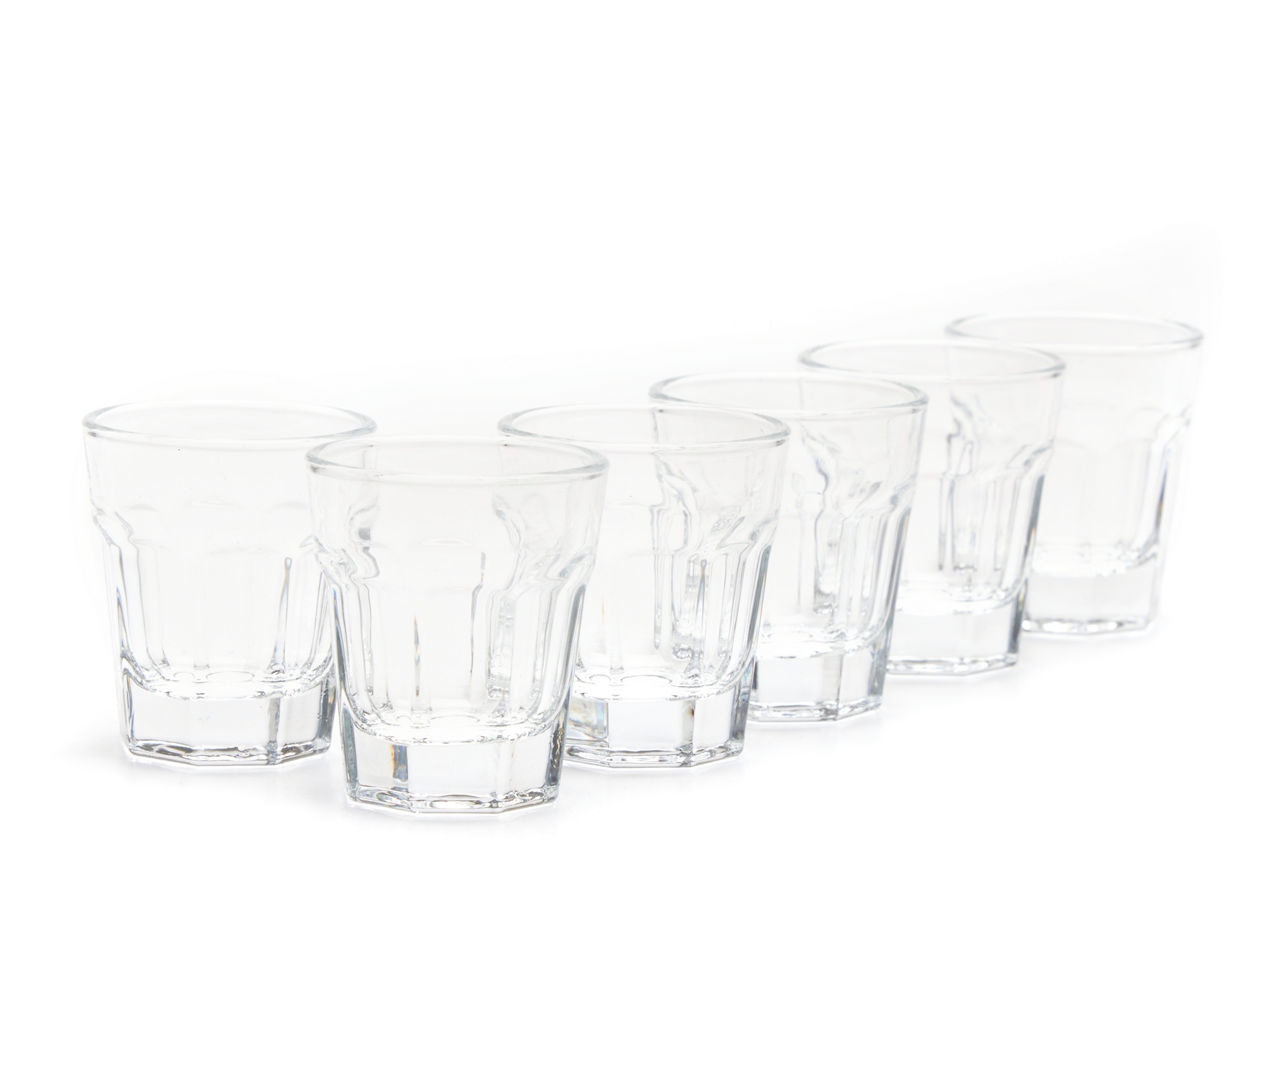 Shotglass set Drinkware at